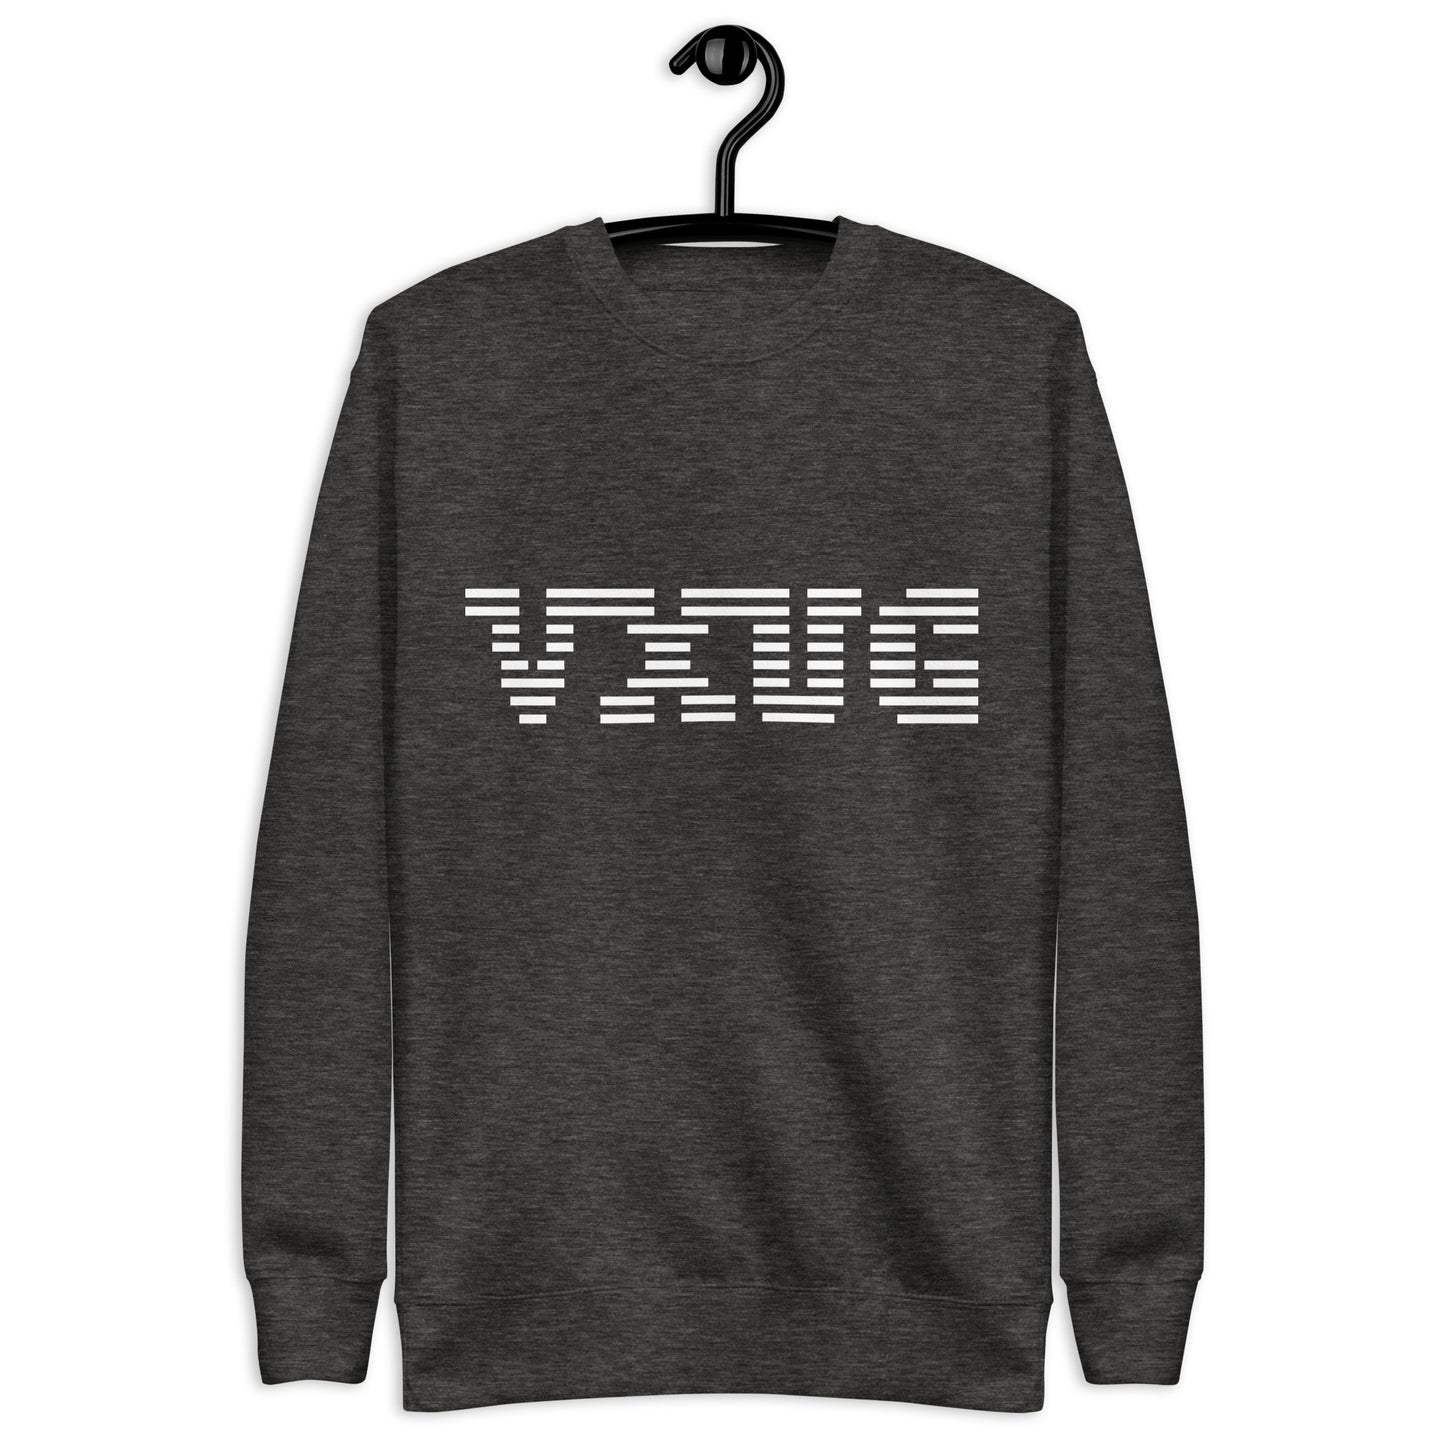 VXUG Corporate Unisex Premium Sweatshirt